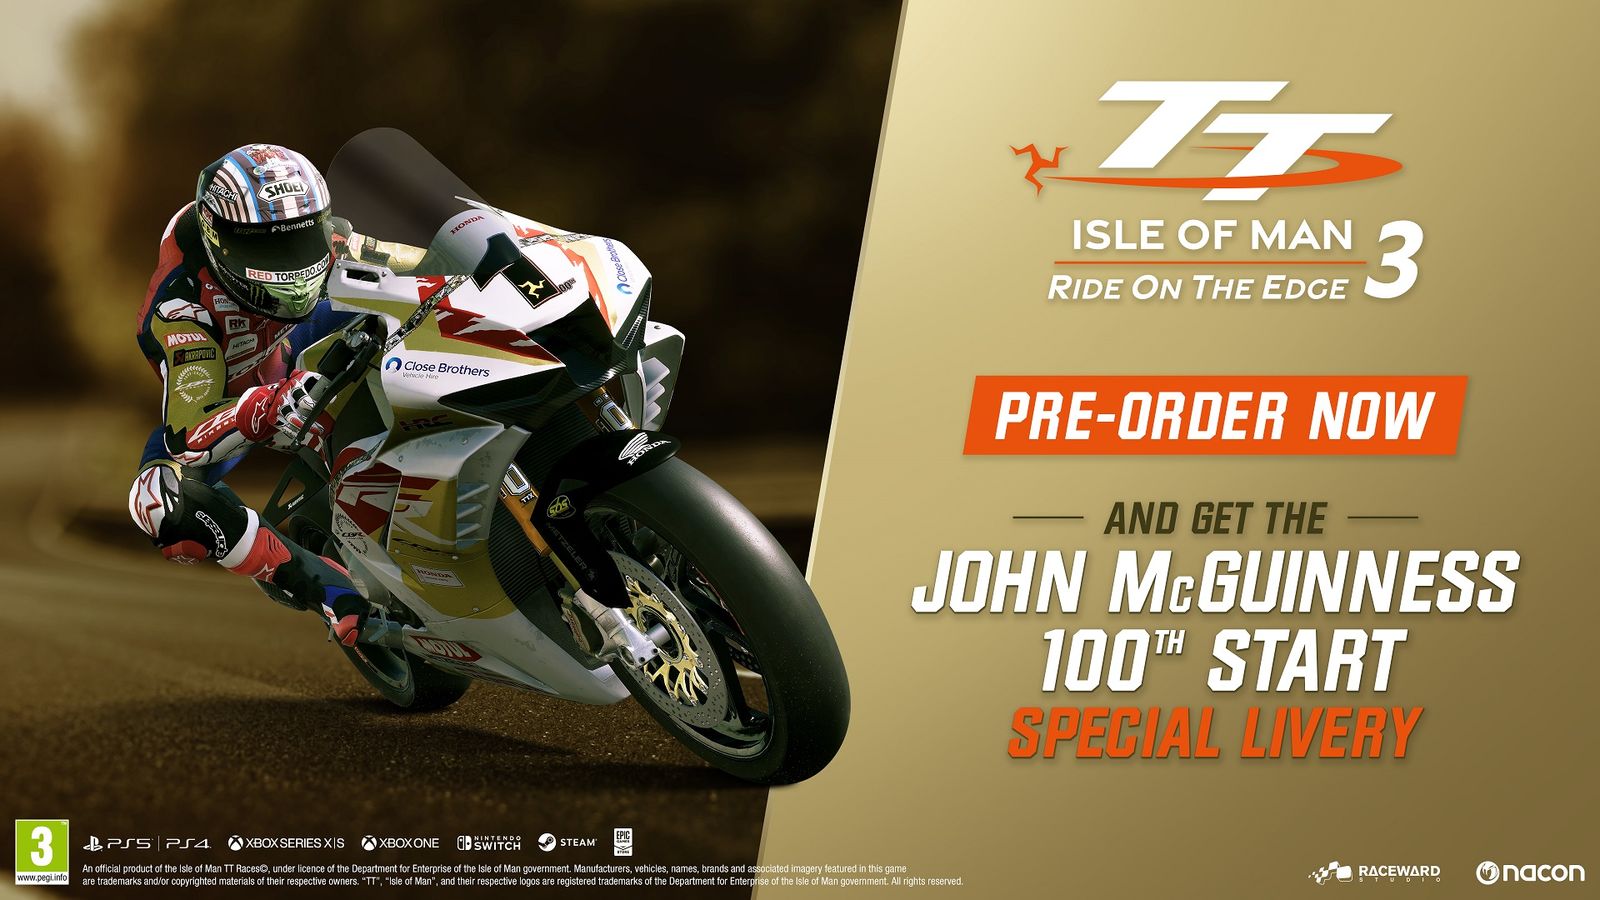 TT Isle of Man Ride on the Edge 3 pre-order bonus John McGuinness 100th Start Special Livery